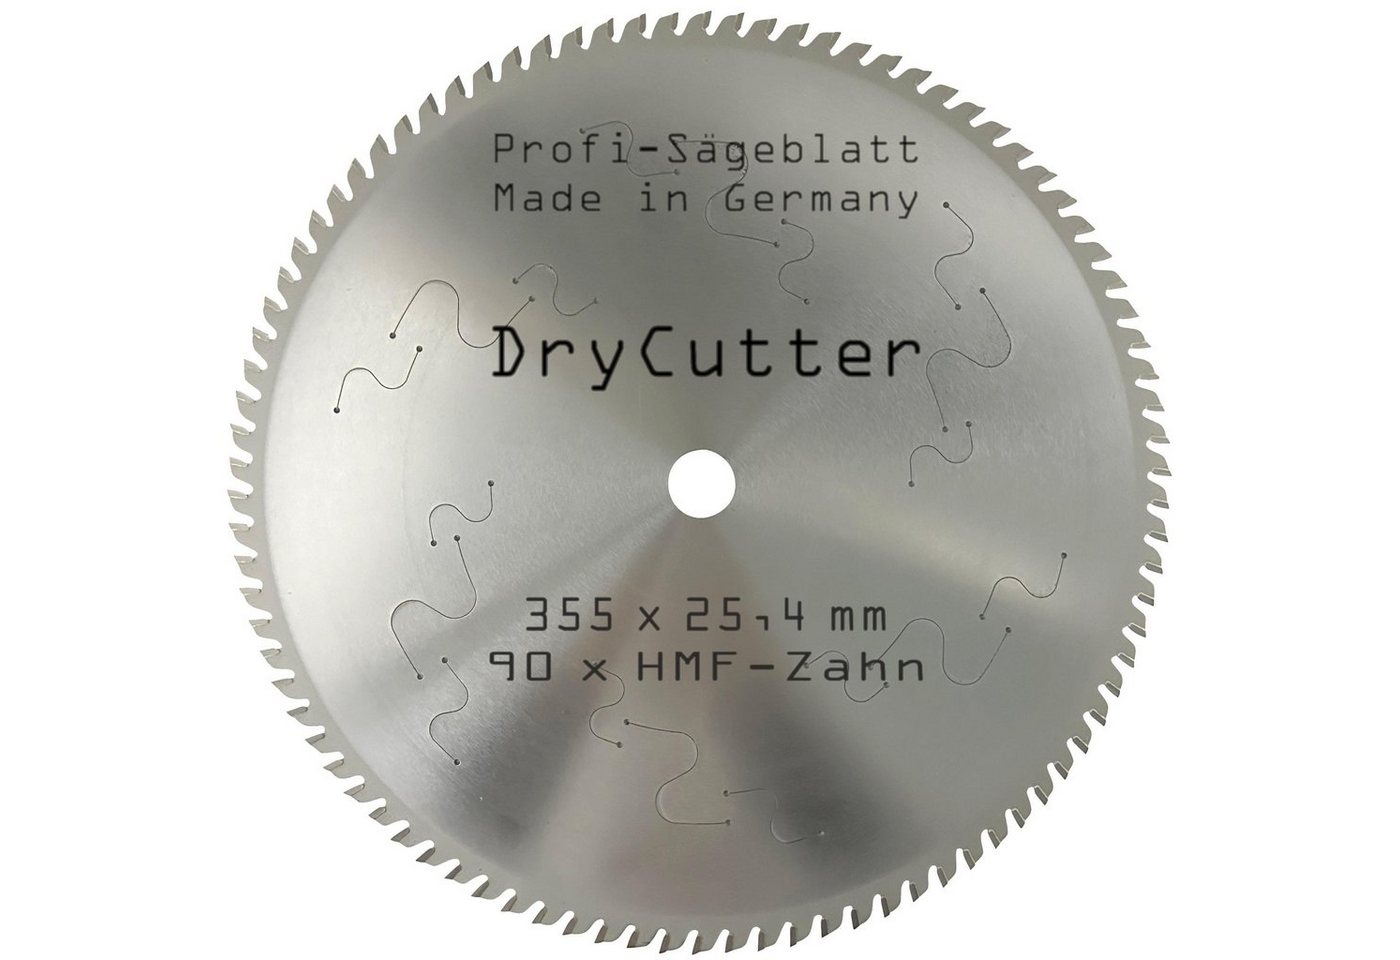 BauSupermarkt24 Kreissägeblatt Sägeblatt Dry-Cutter 355 x 25,4 mm für Kreissäge Alu Kunstoff Stahl von BauSupermarkt24